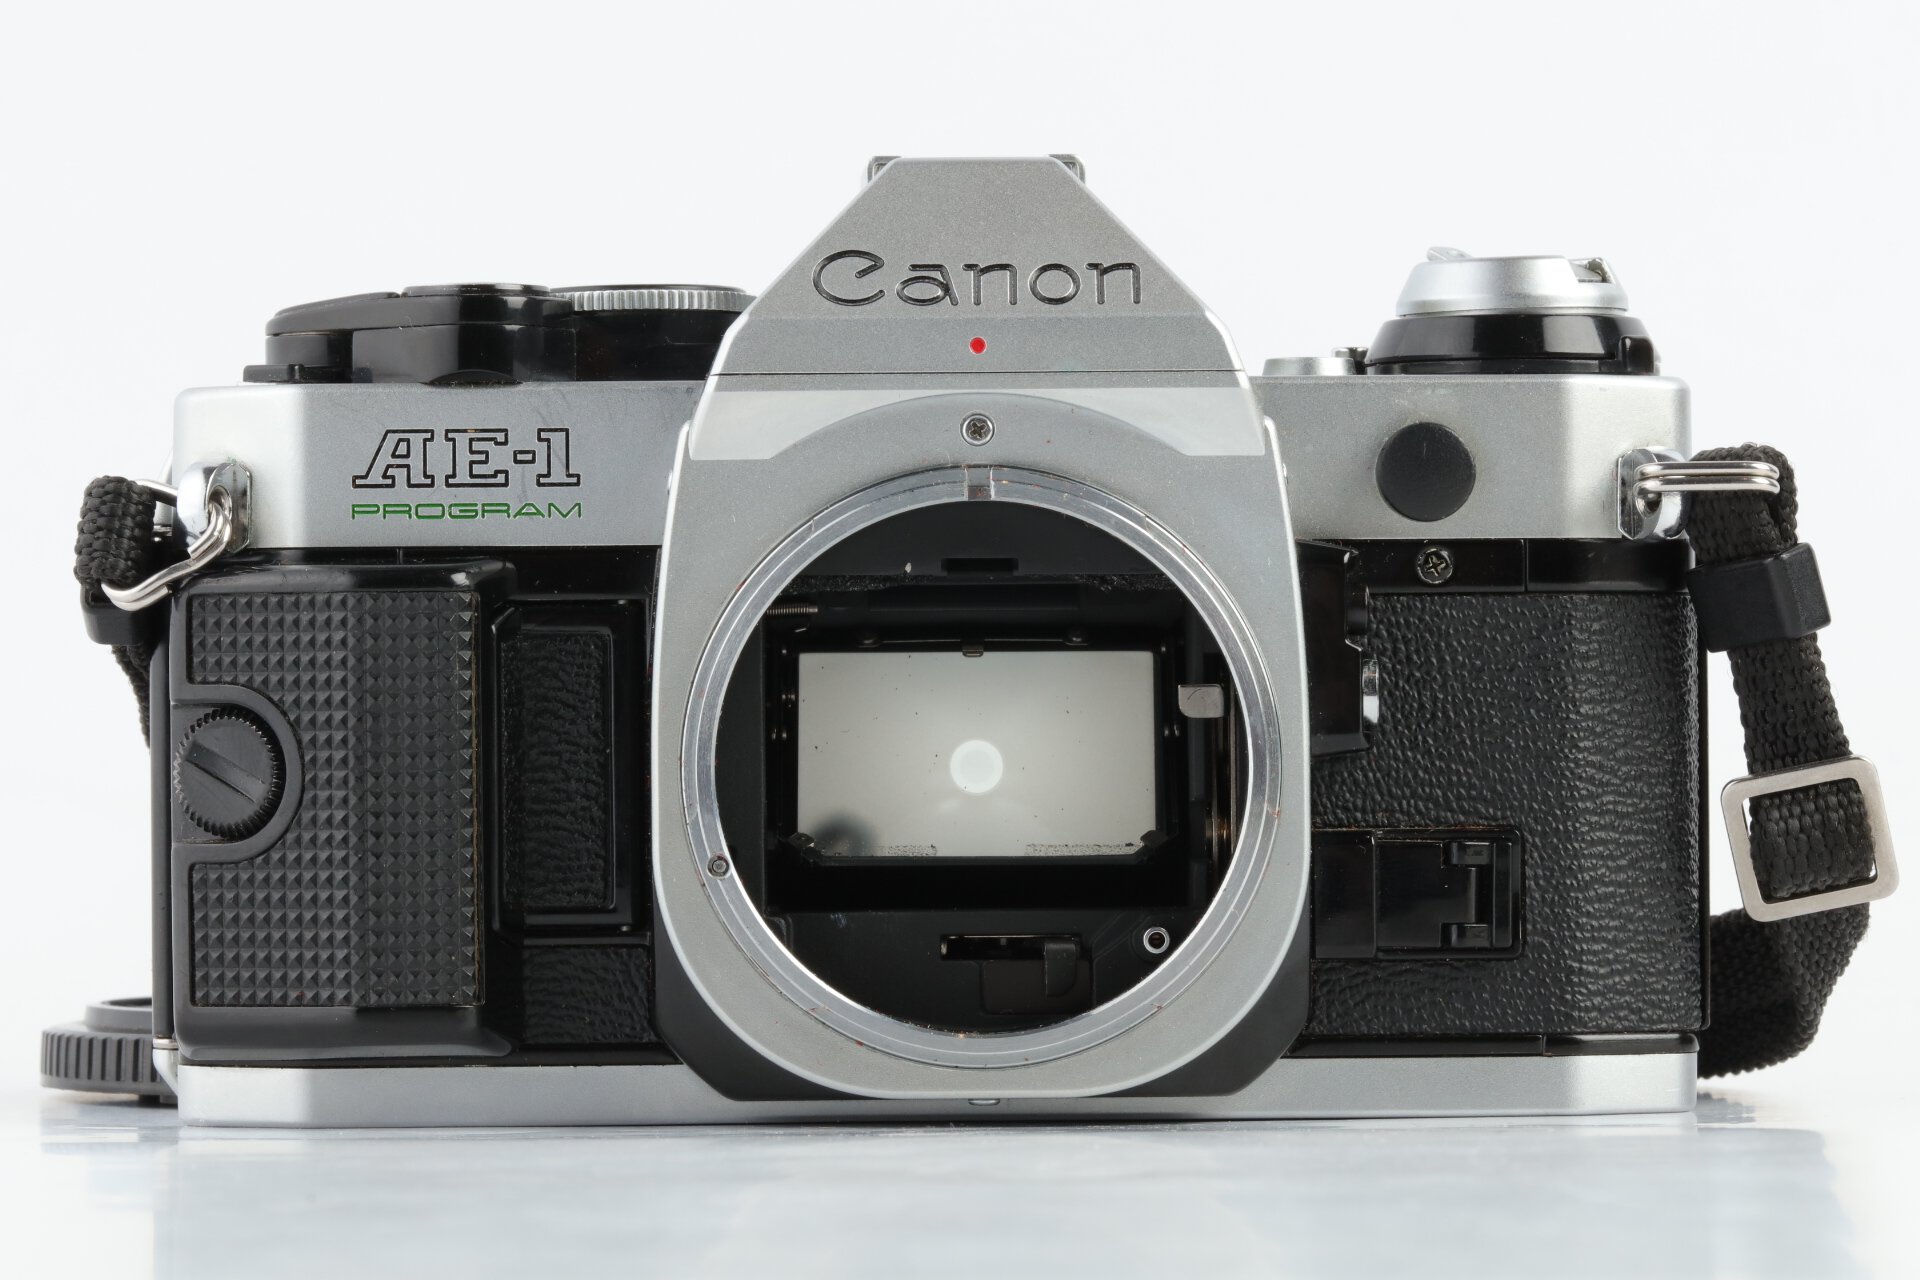 Canon AE-1 Programm chrom